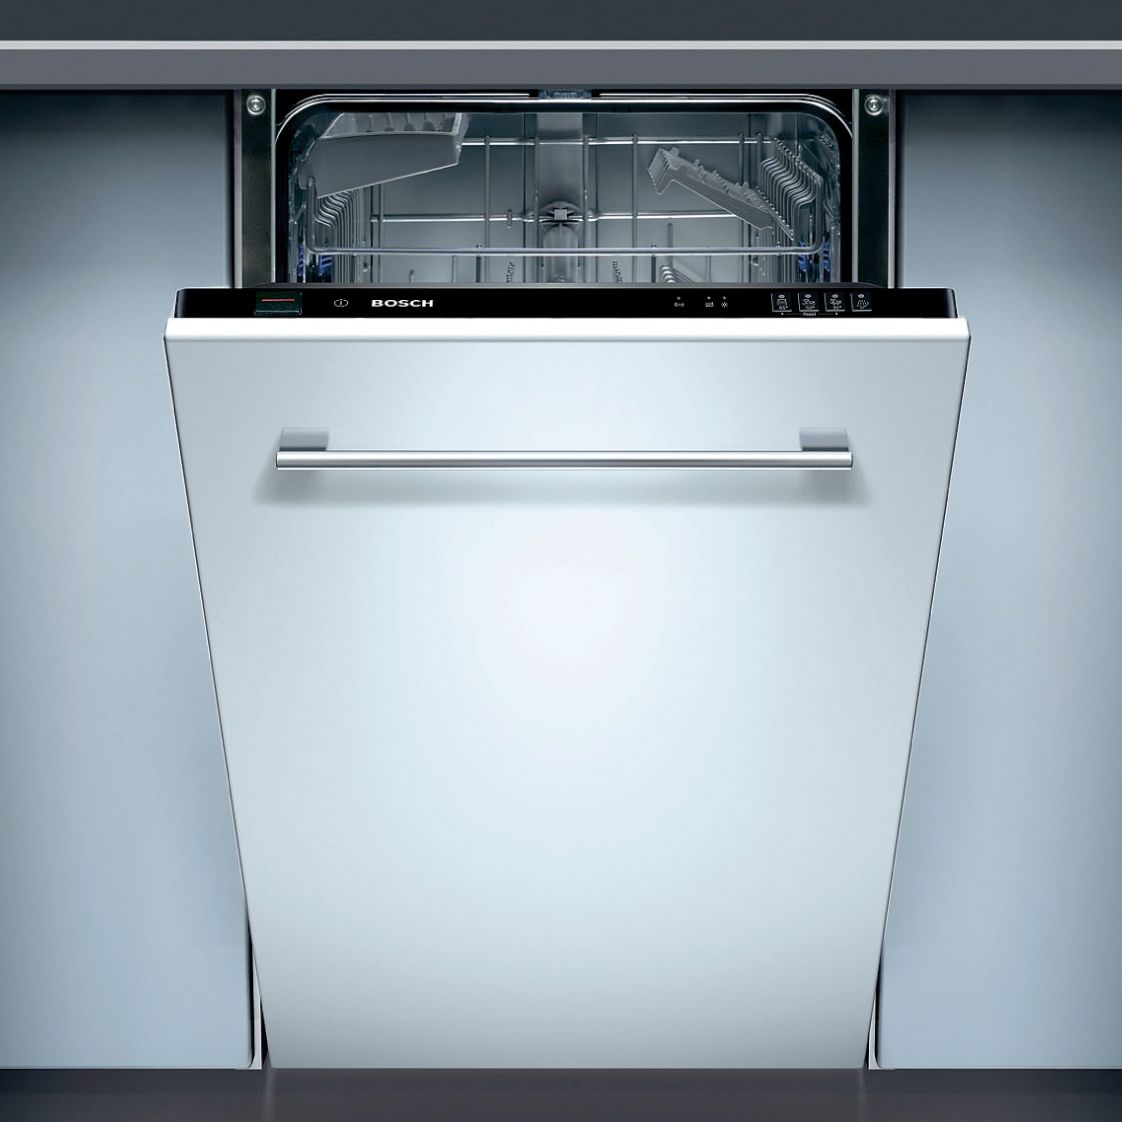 Bosch SRV43M03 Integrated Slimline Dishwasher at JohnLewis